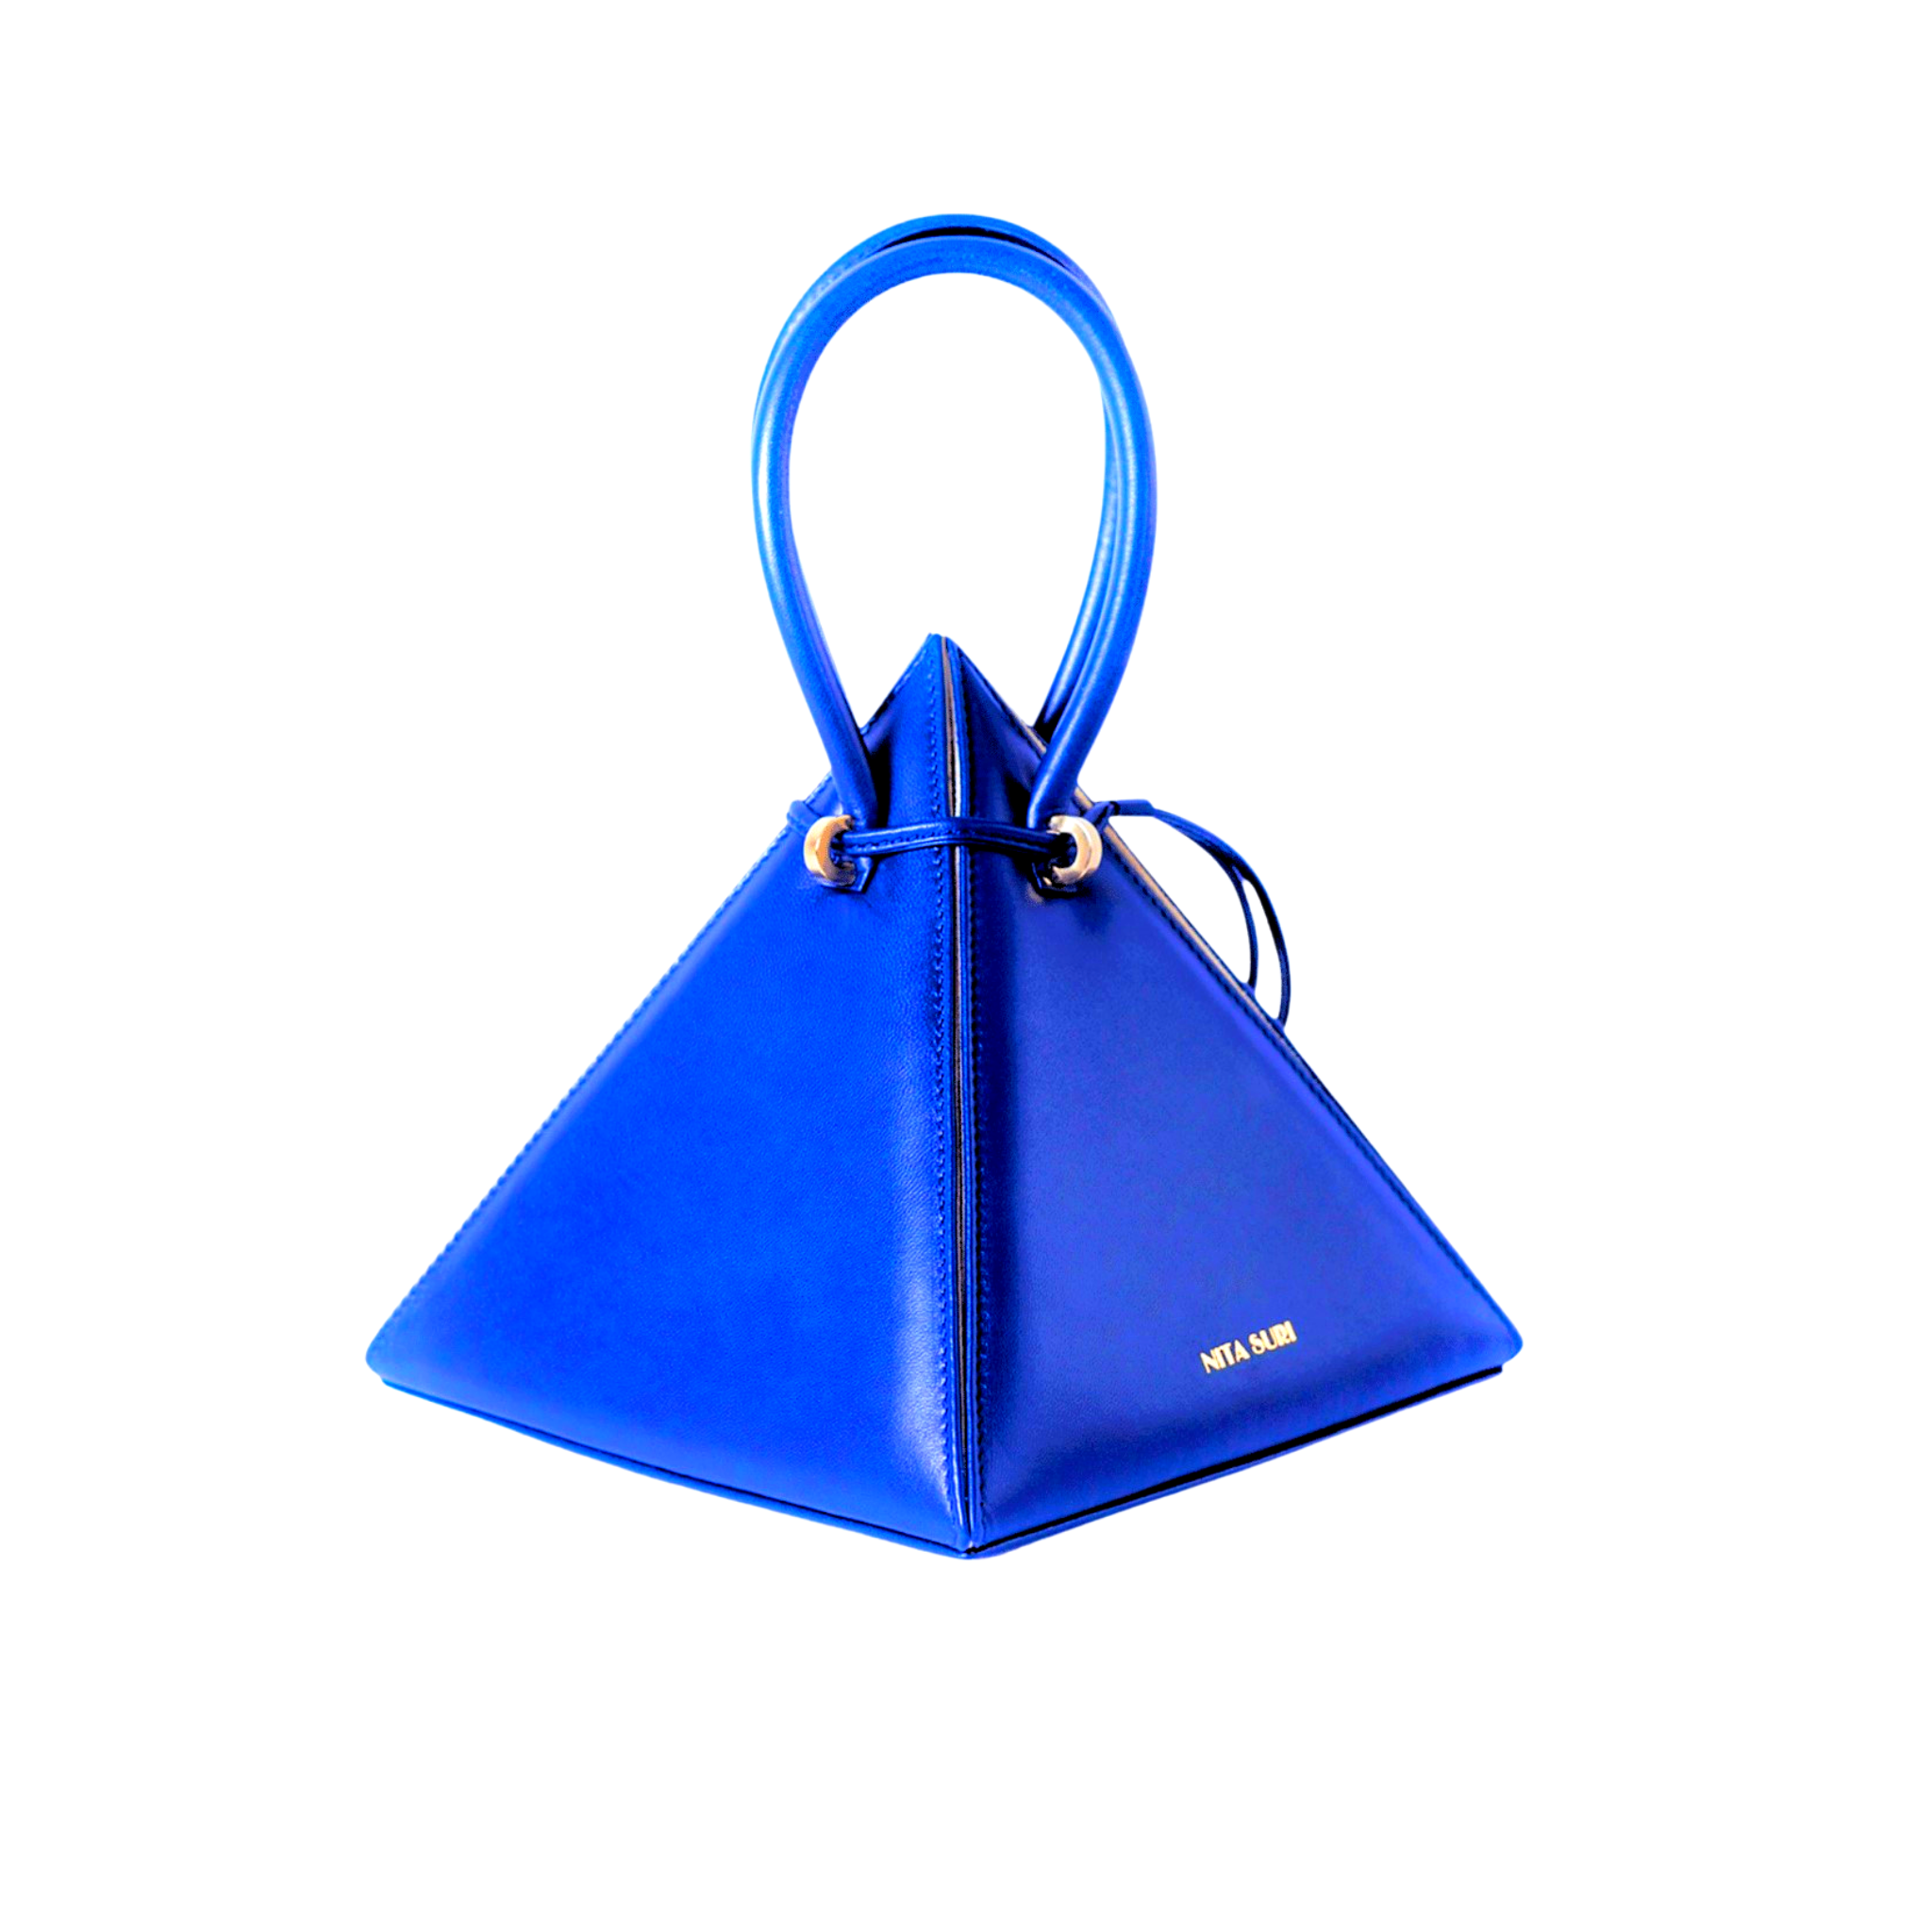 NITASURI- LIA Pyramid Red Iconic Leather Handbag